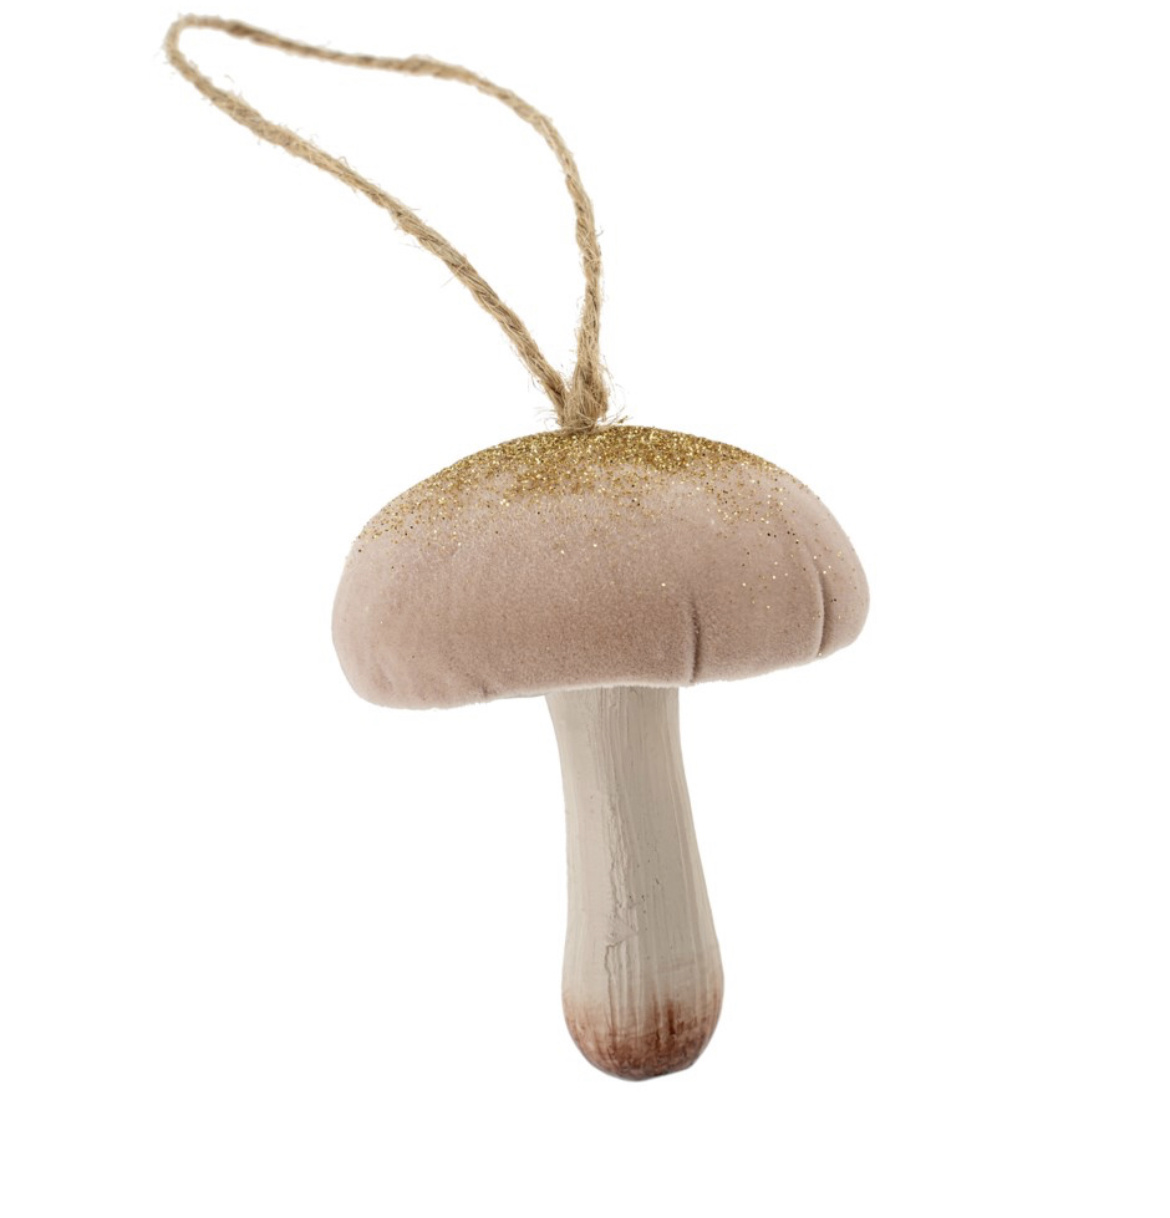 Indaba Trading Co. Magical Mushroom Ornaments